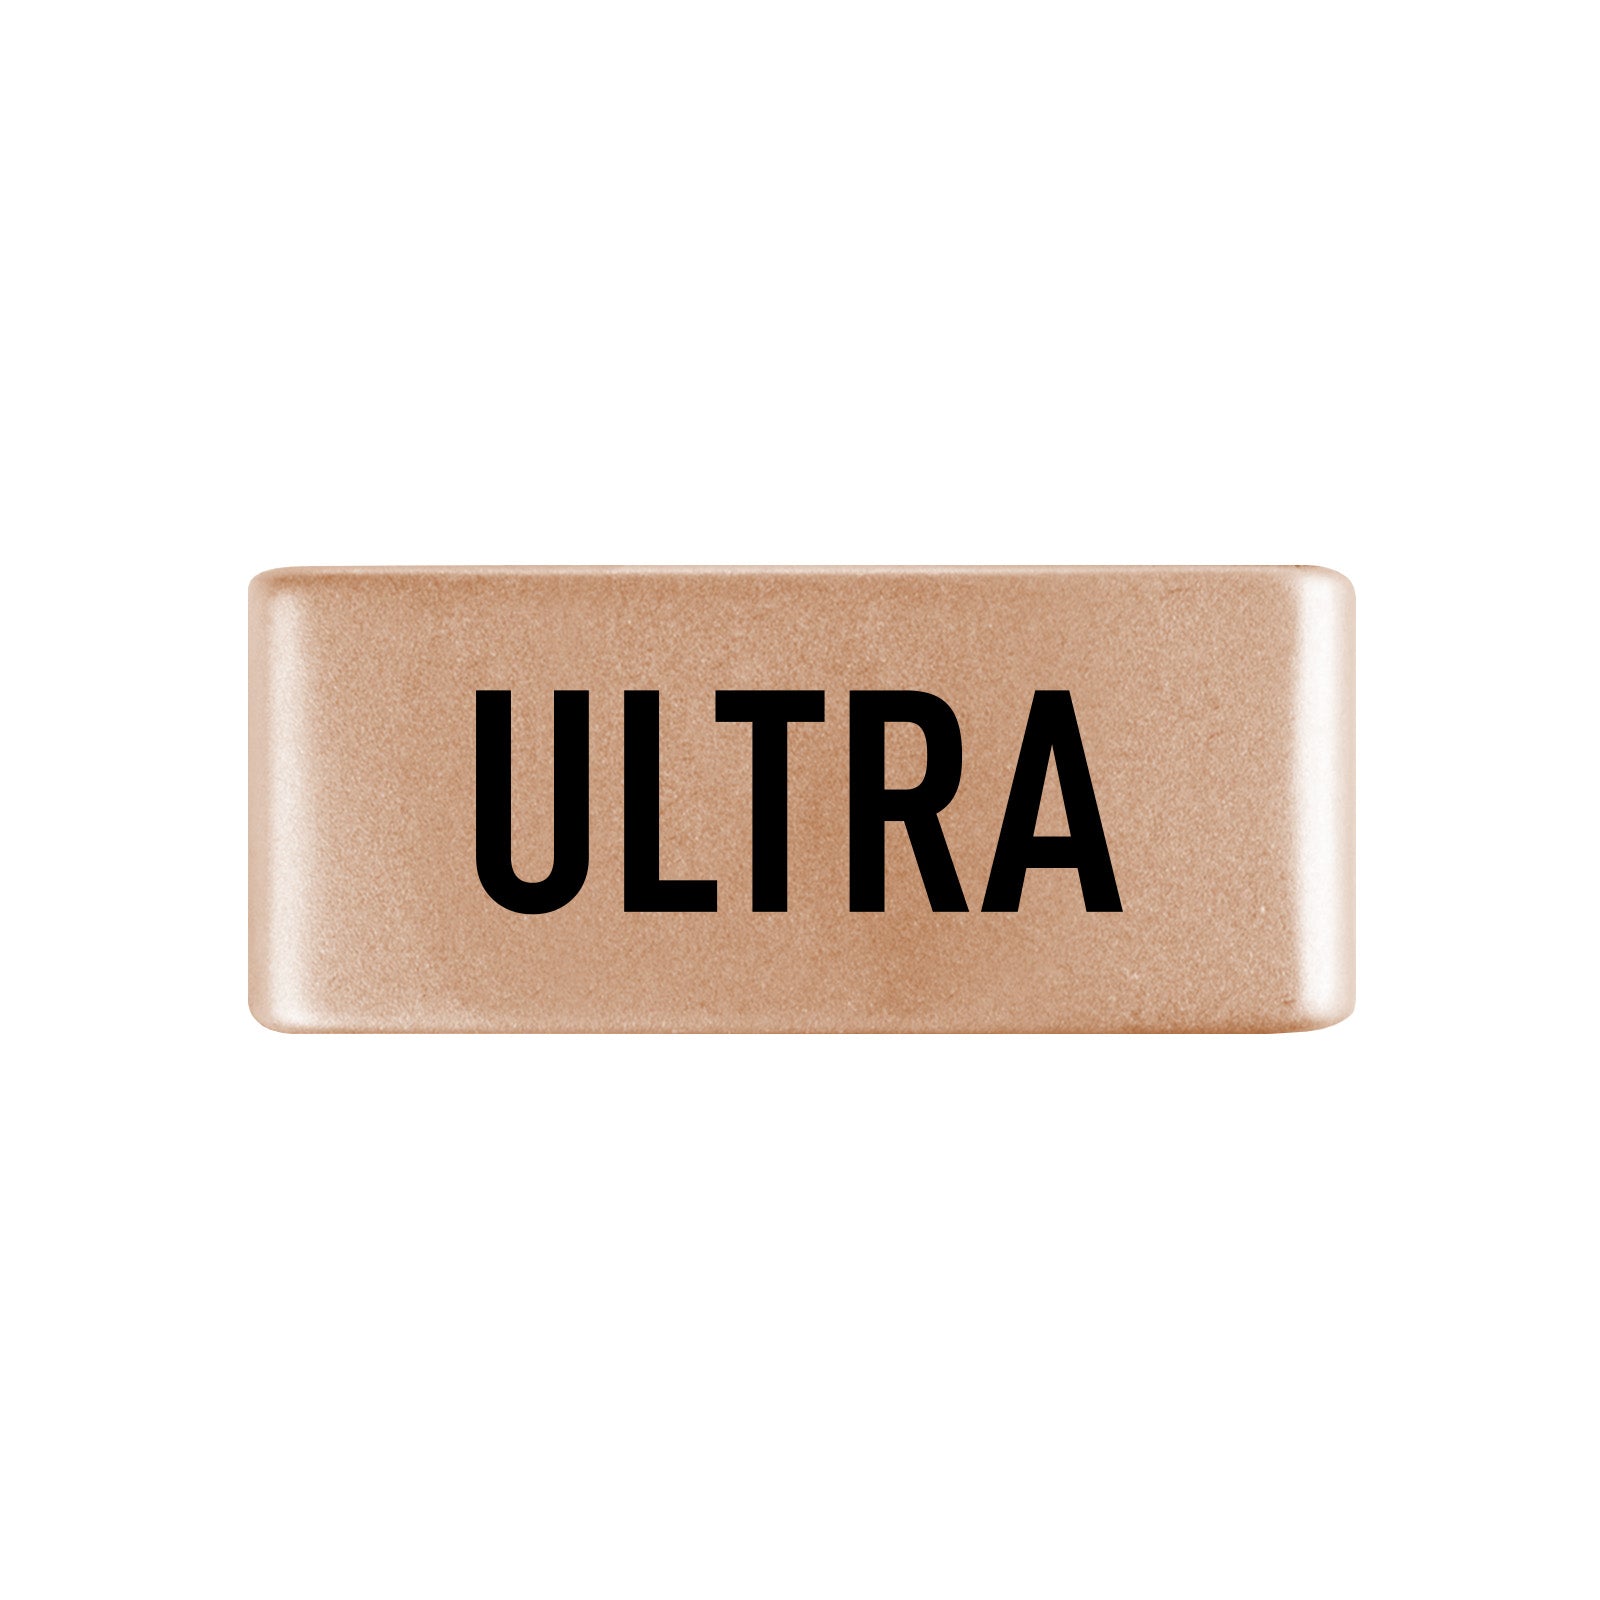 Ultra Badge Badge 13mm - ROAD iD